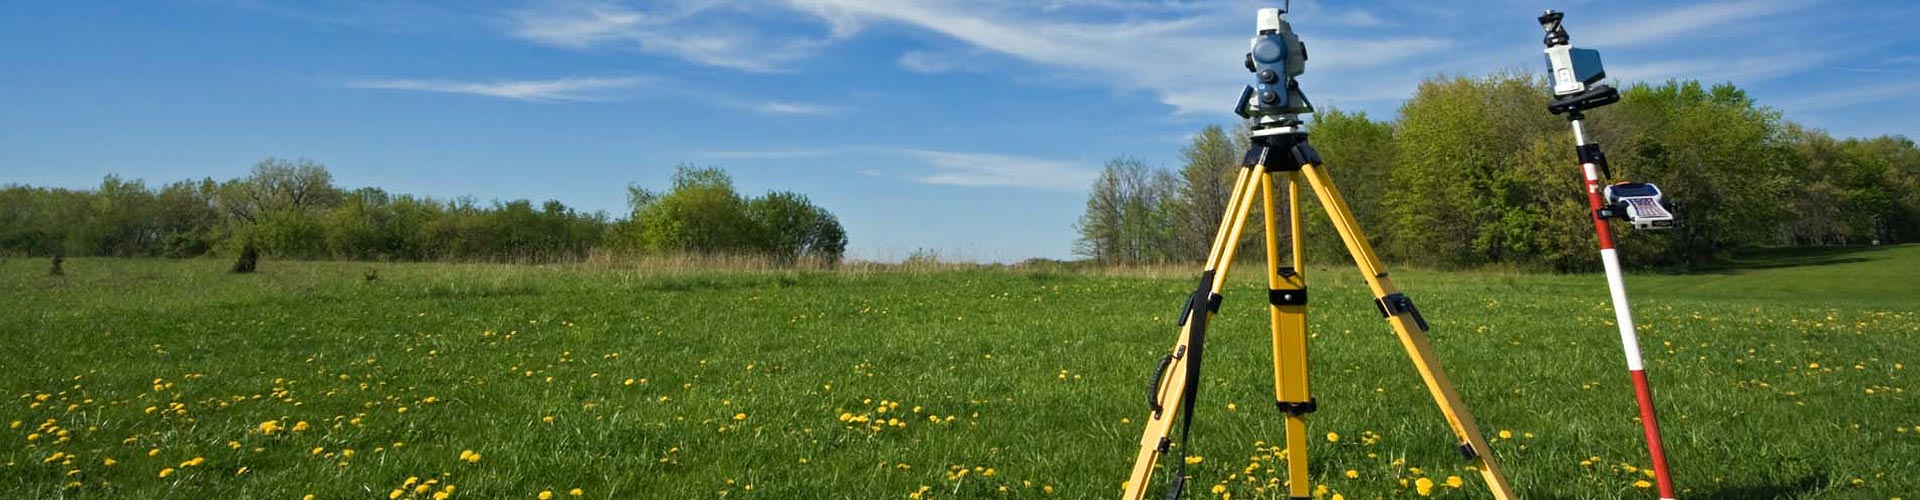 land surveying equipment